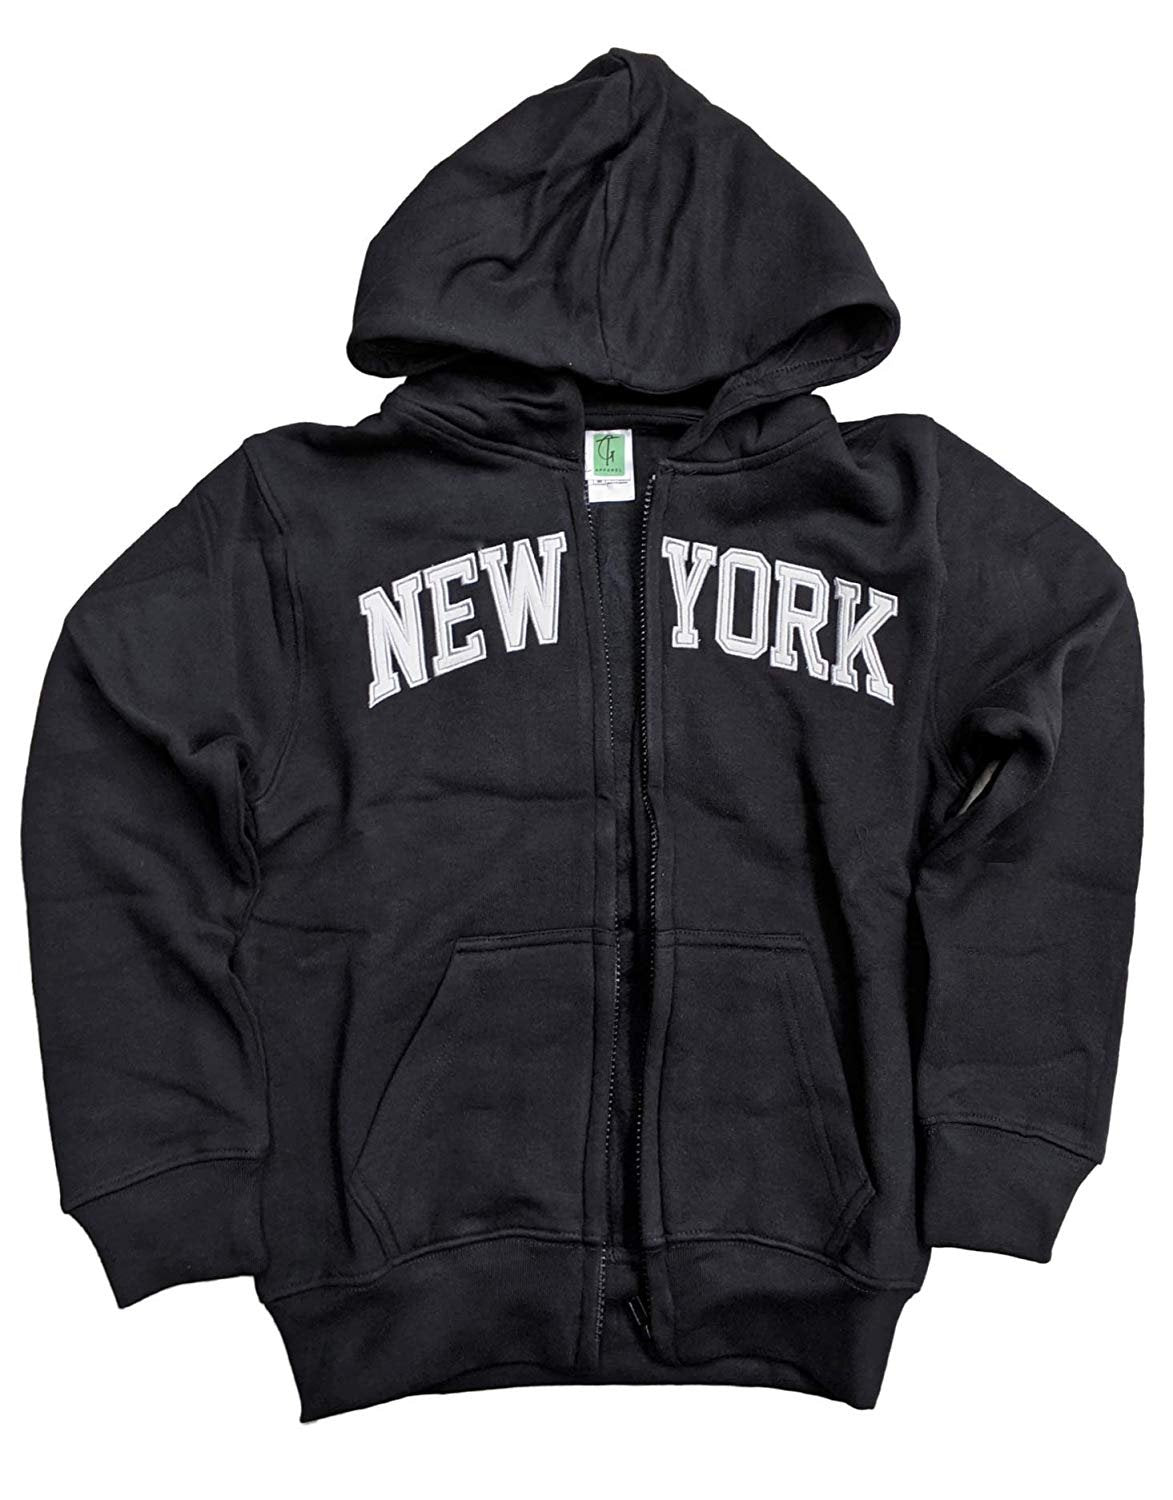 Kid's New York City Zippered Hoodie Sweatshirt Black